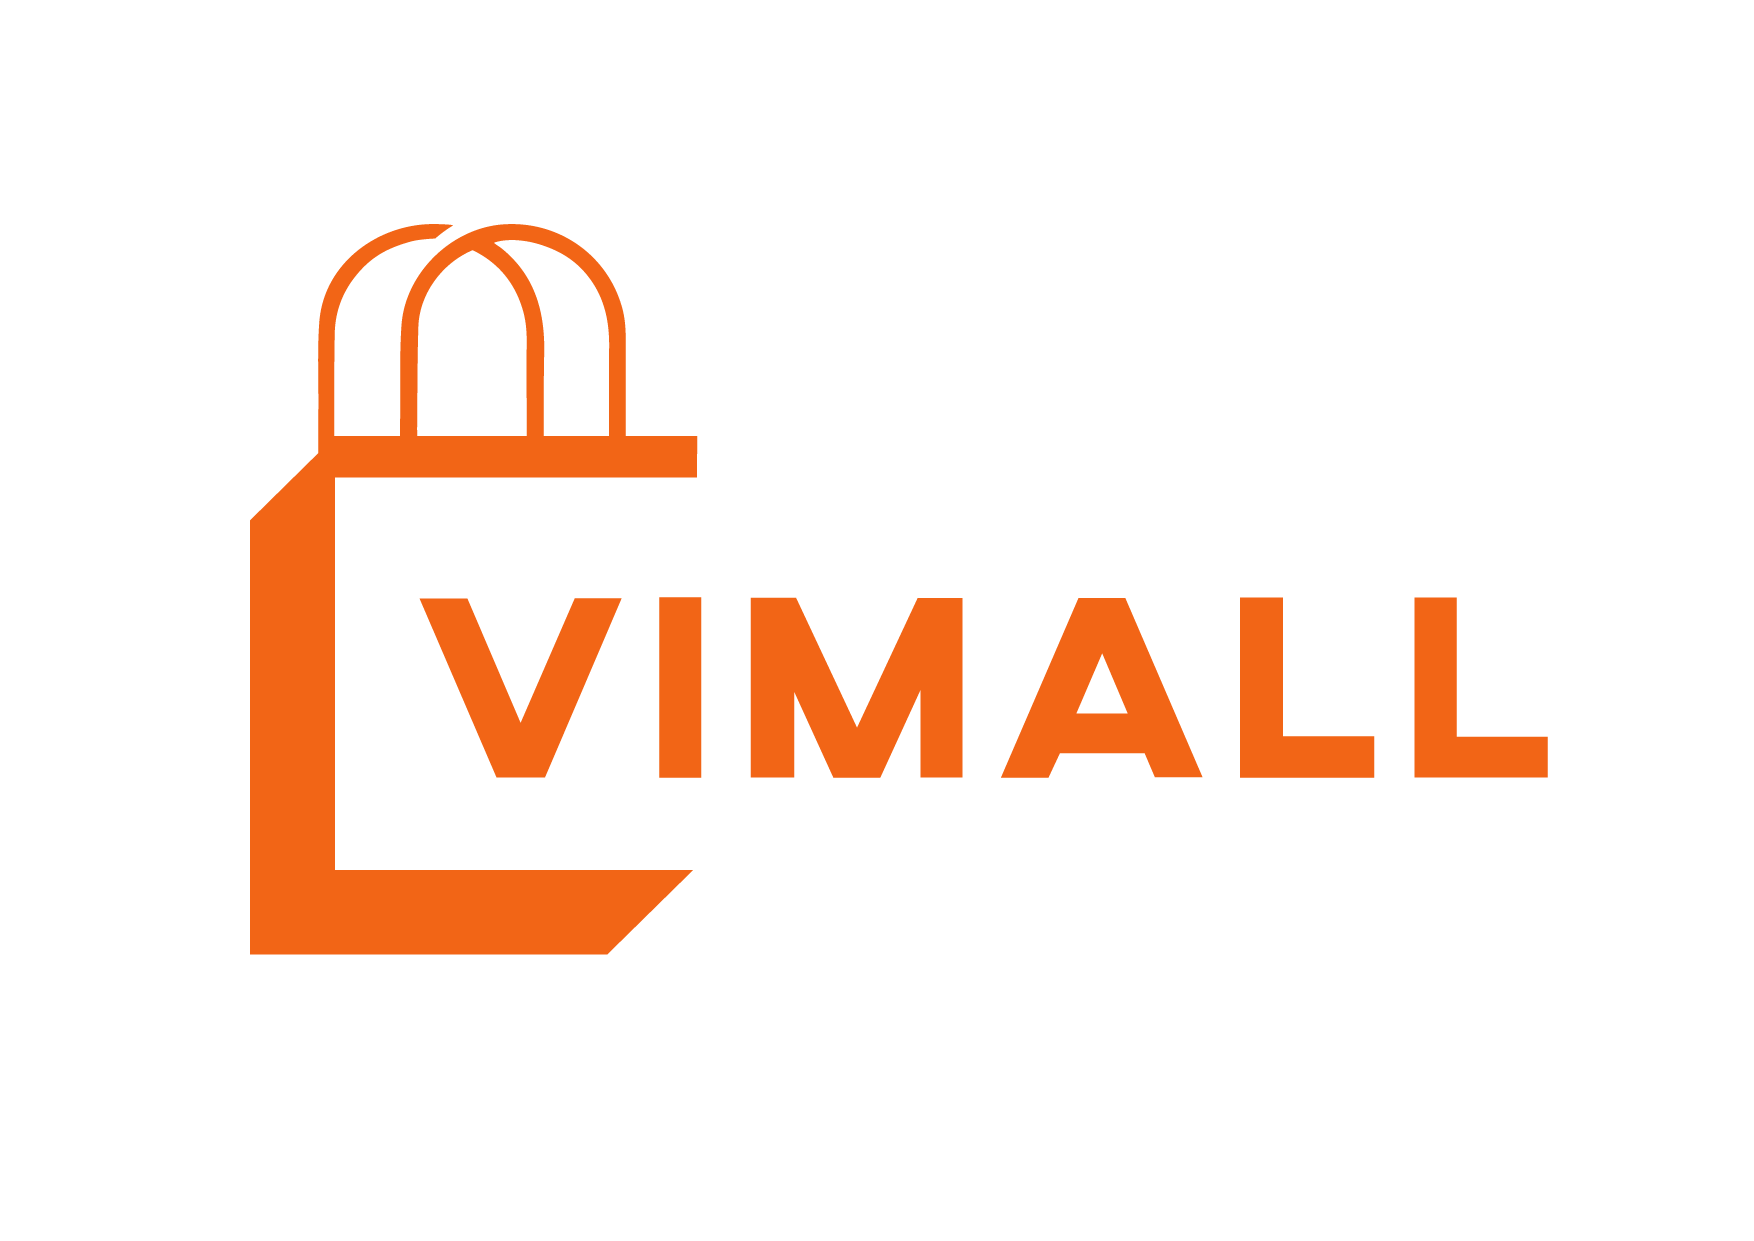 ViMall